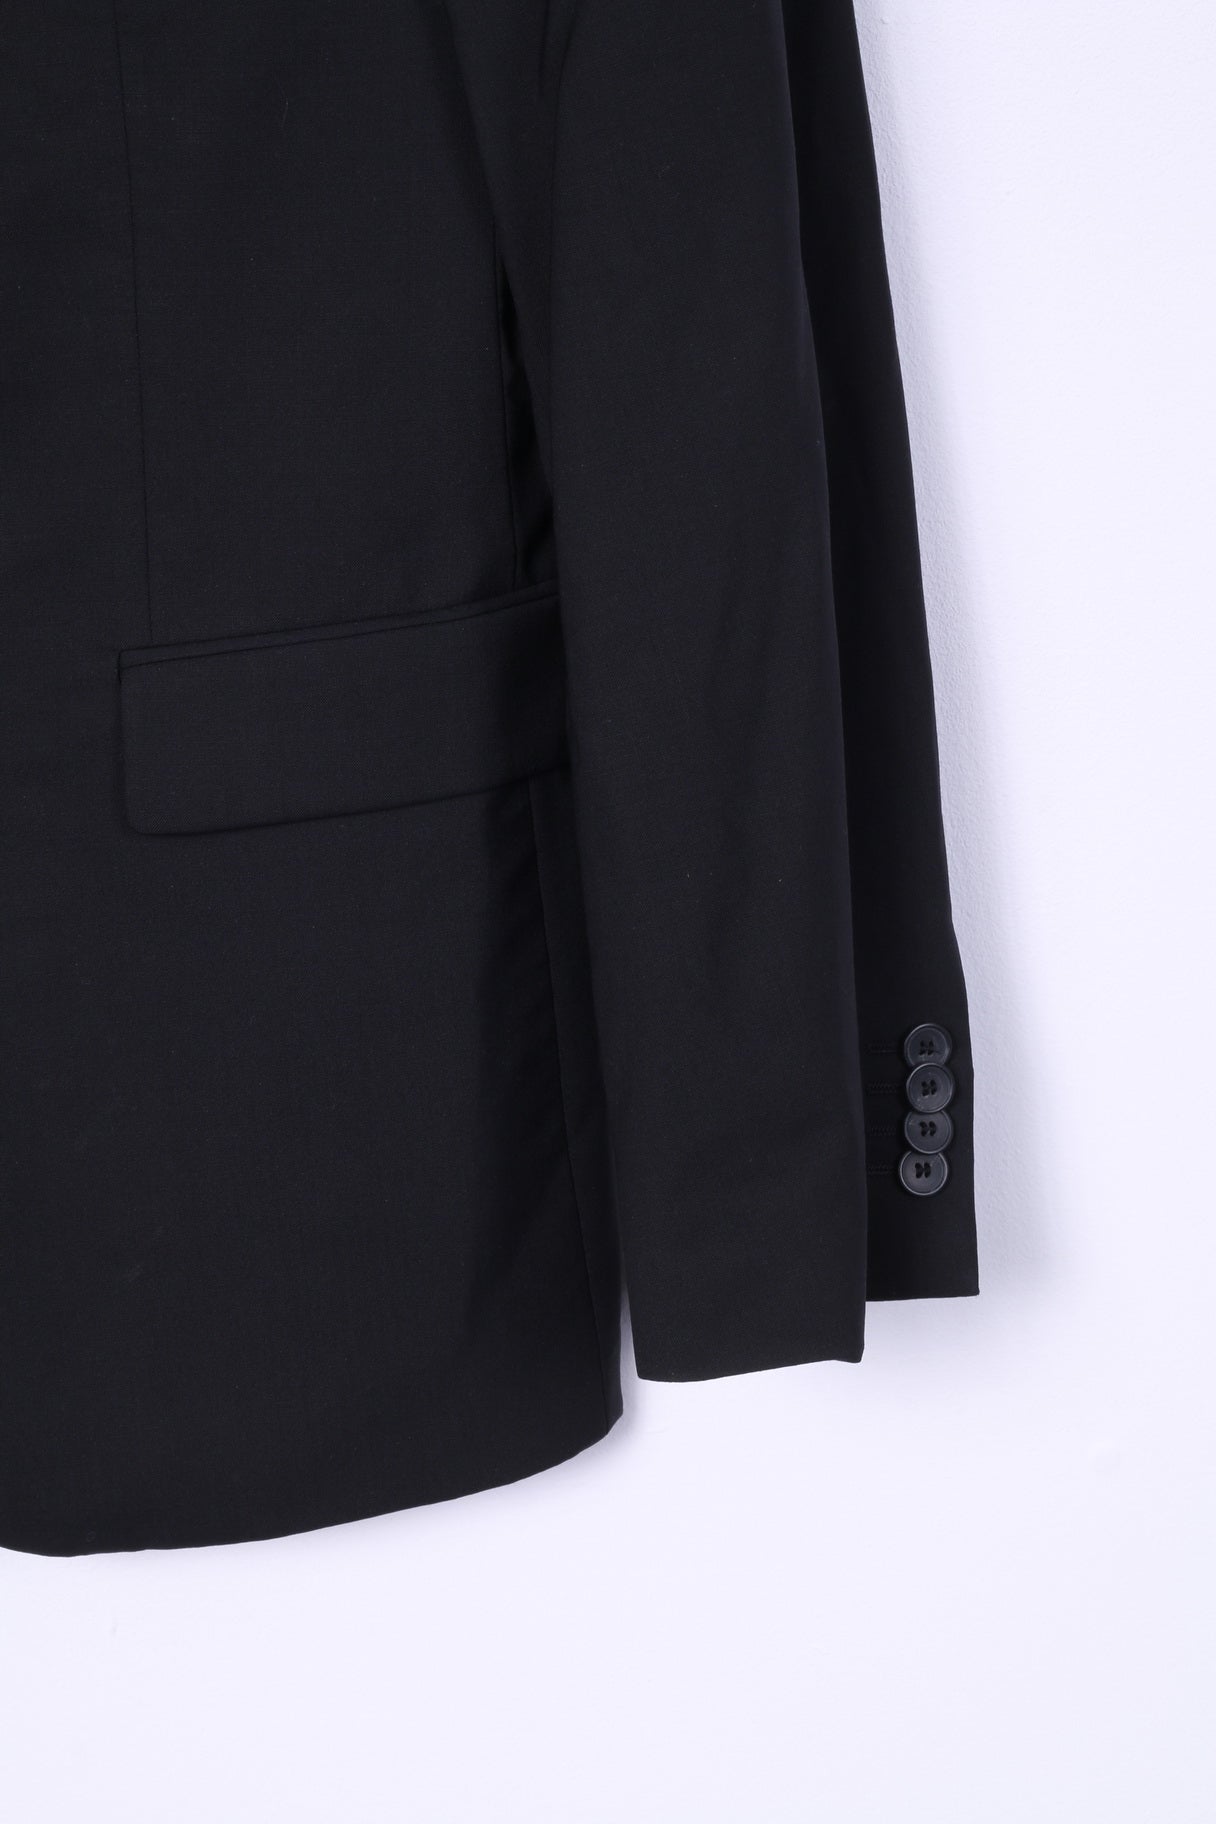 Hugo Boss Men 98 40 Blazer Jacket Single Breasted Black Amaro/Helse Wool